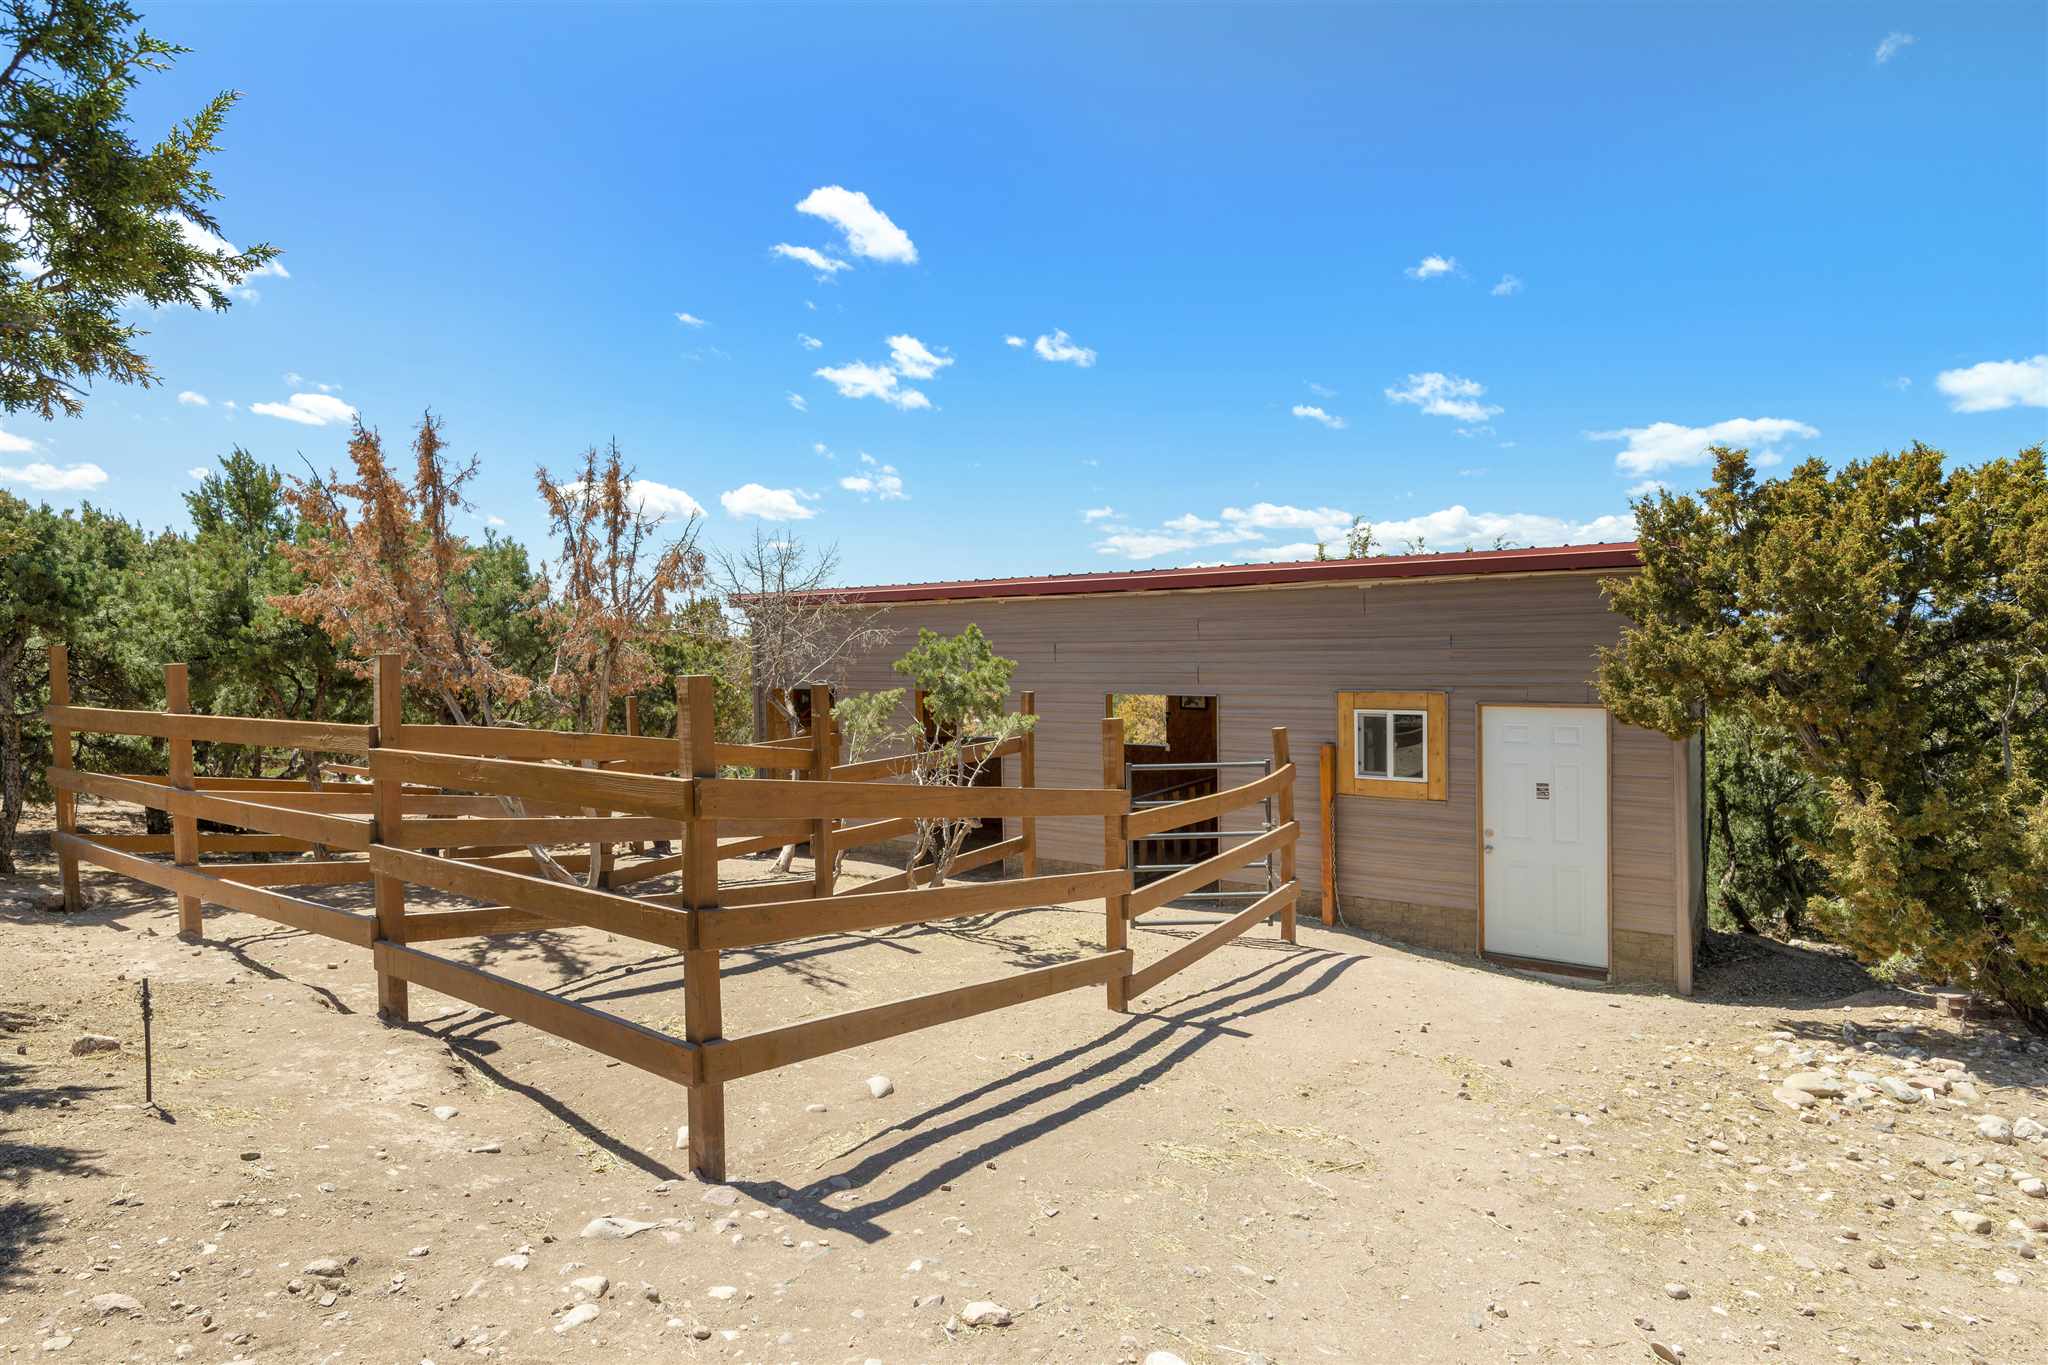 63 Tano, Santa Fe, New Mexico 87506, 3 Bedrooms Bedrooms, ,2 BathroomsBathrooms,Residential,For Sale,63 Tano,202101583